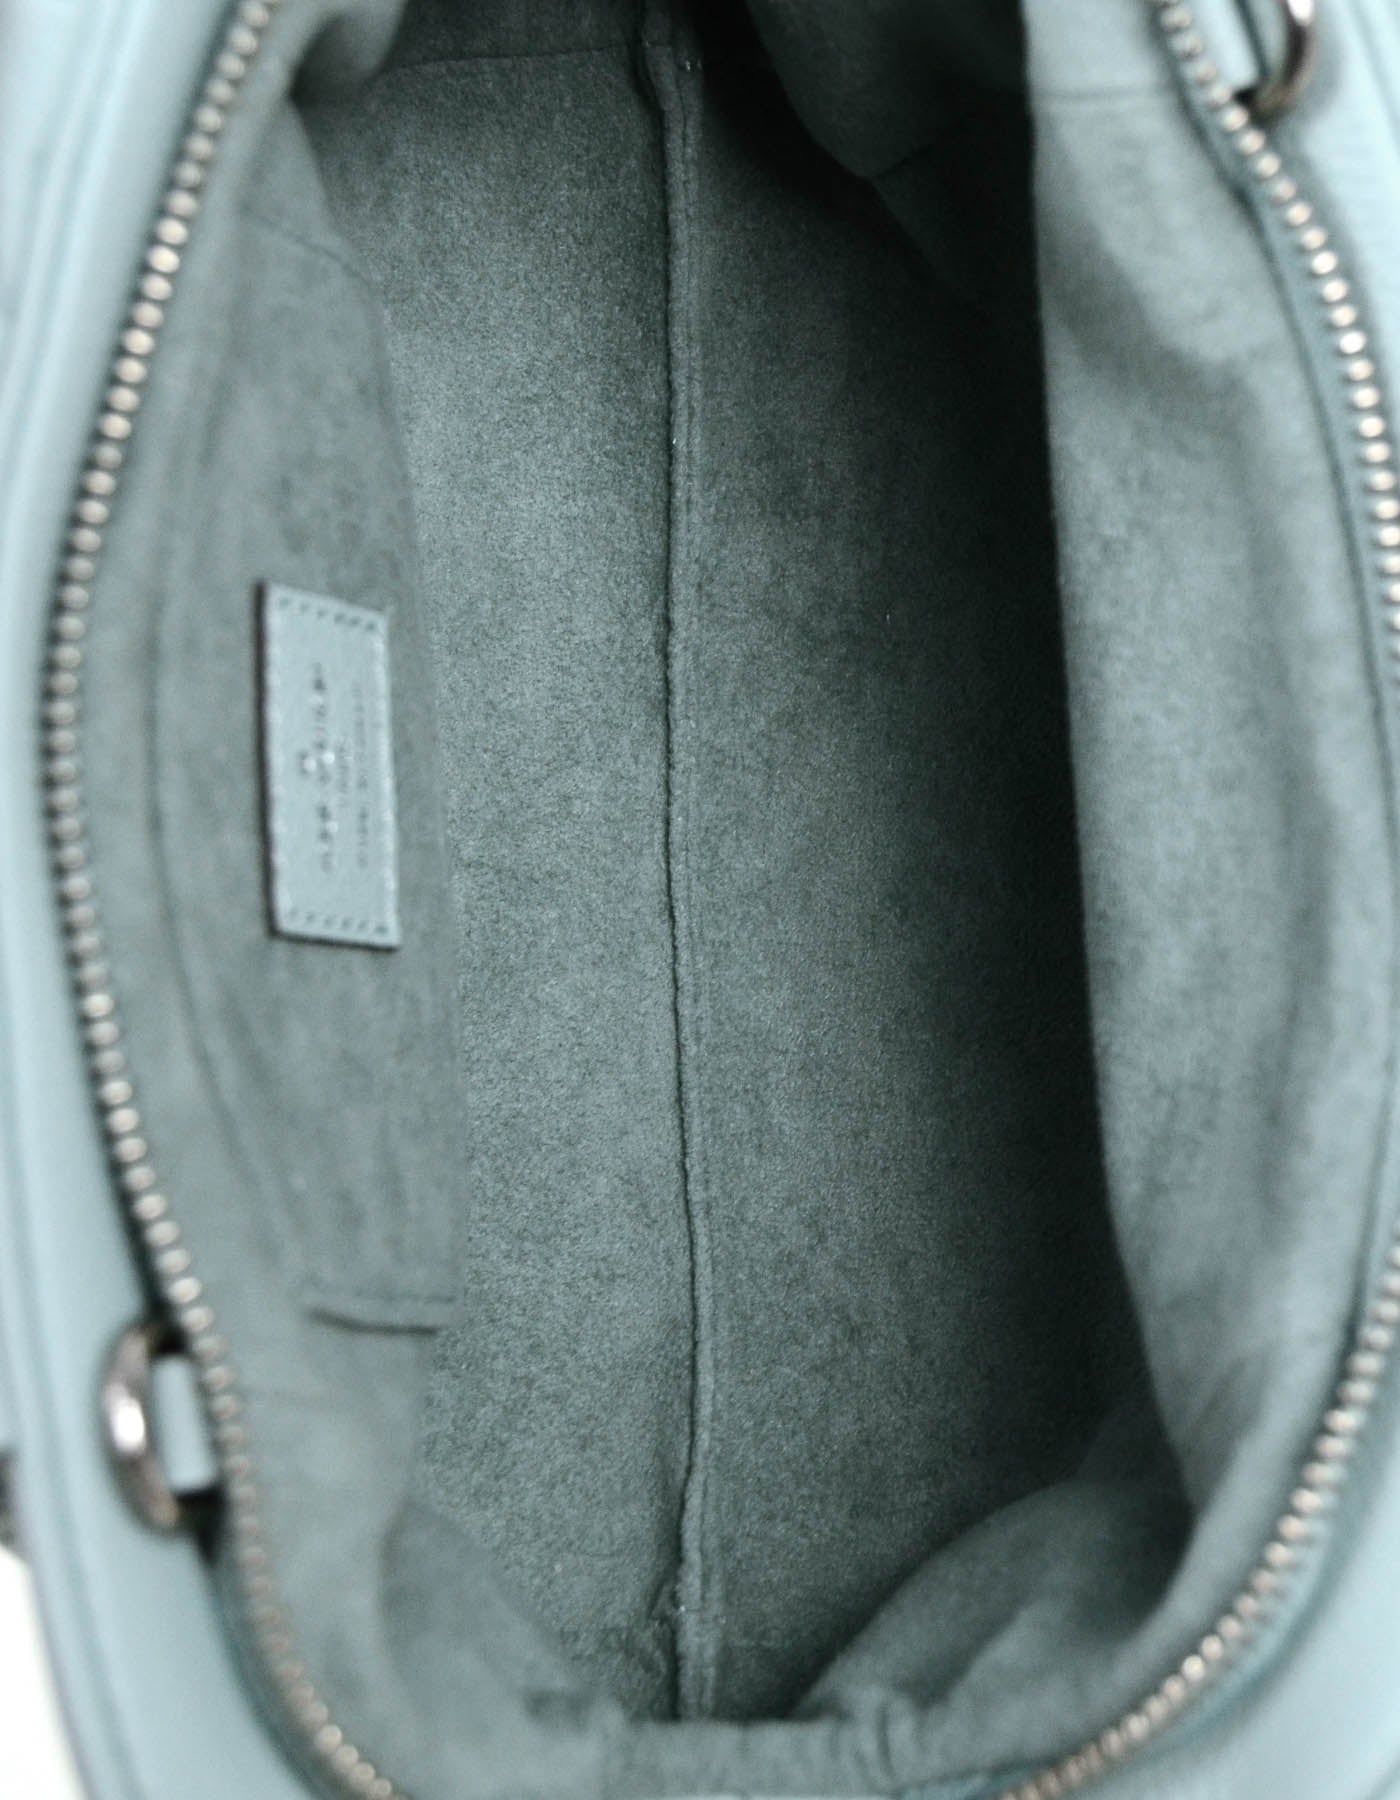 Louis Vuitton Mini Vert Lagon Mahina Scala Pouch - Ann's Fabulous Closeouts